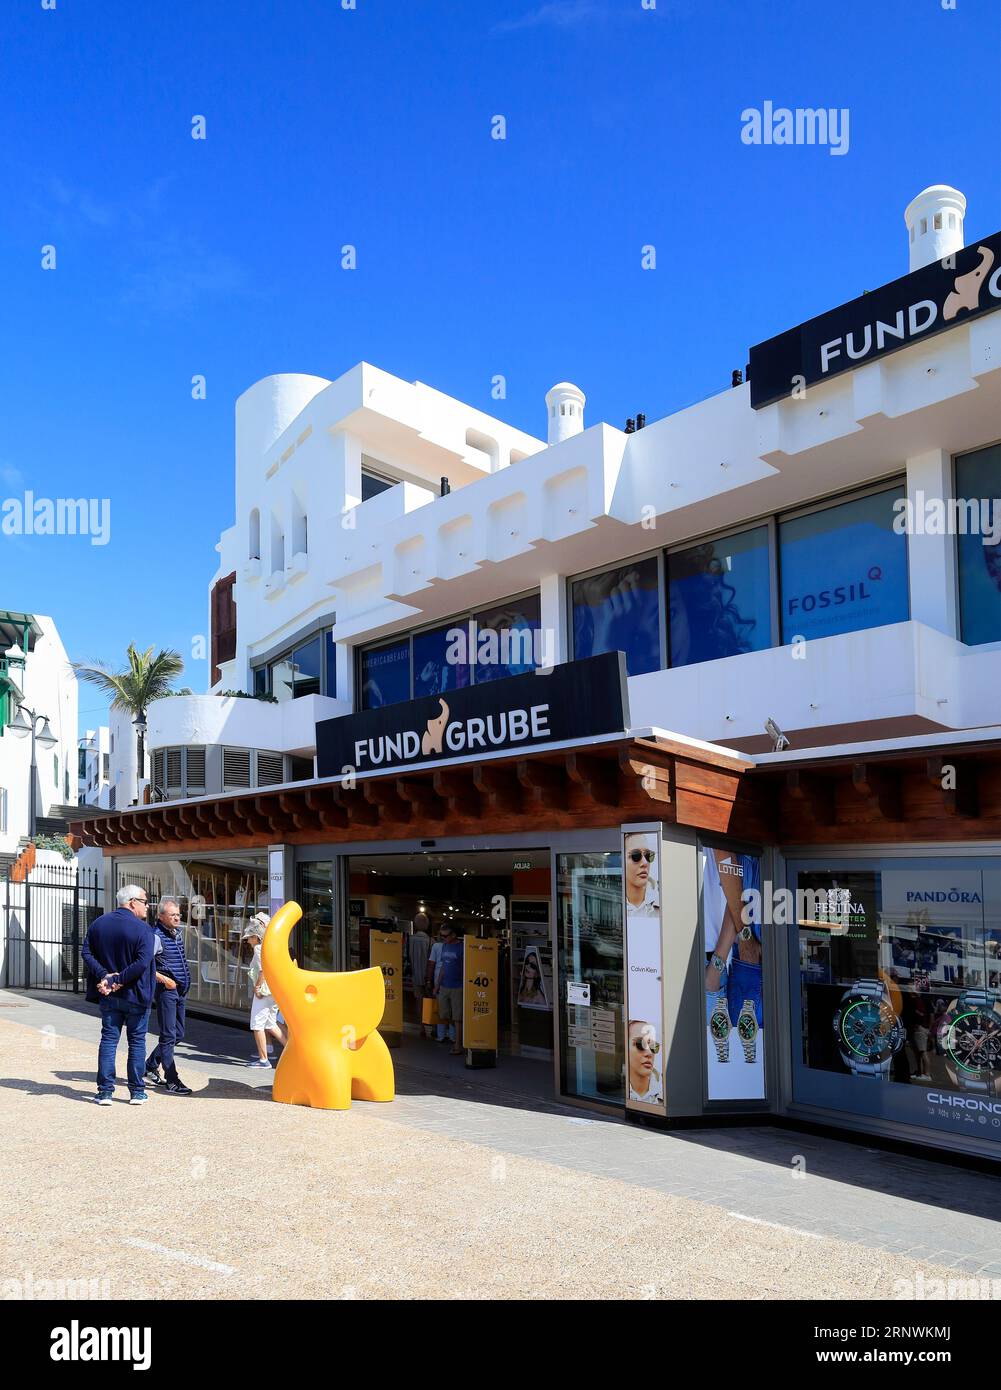 Fonds Grube Retail Outlet, Playa Blanca, Lanzarote, Îles Canaries, Espagne. Banque D'Images